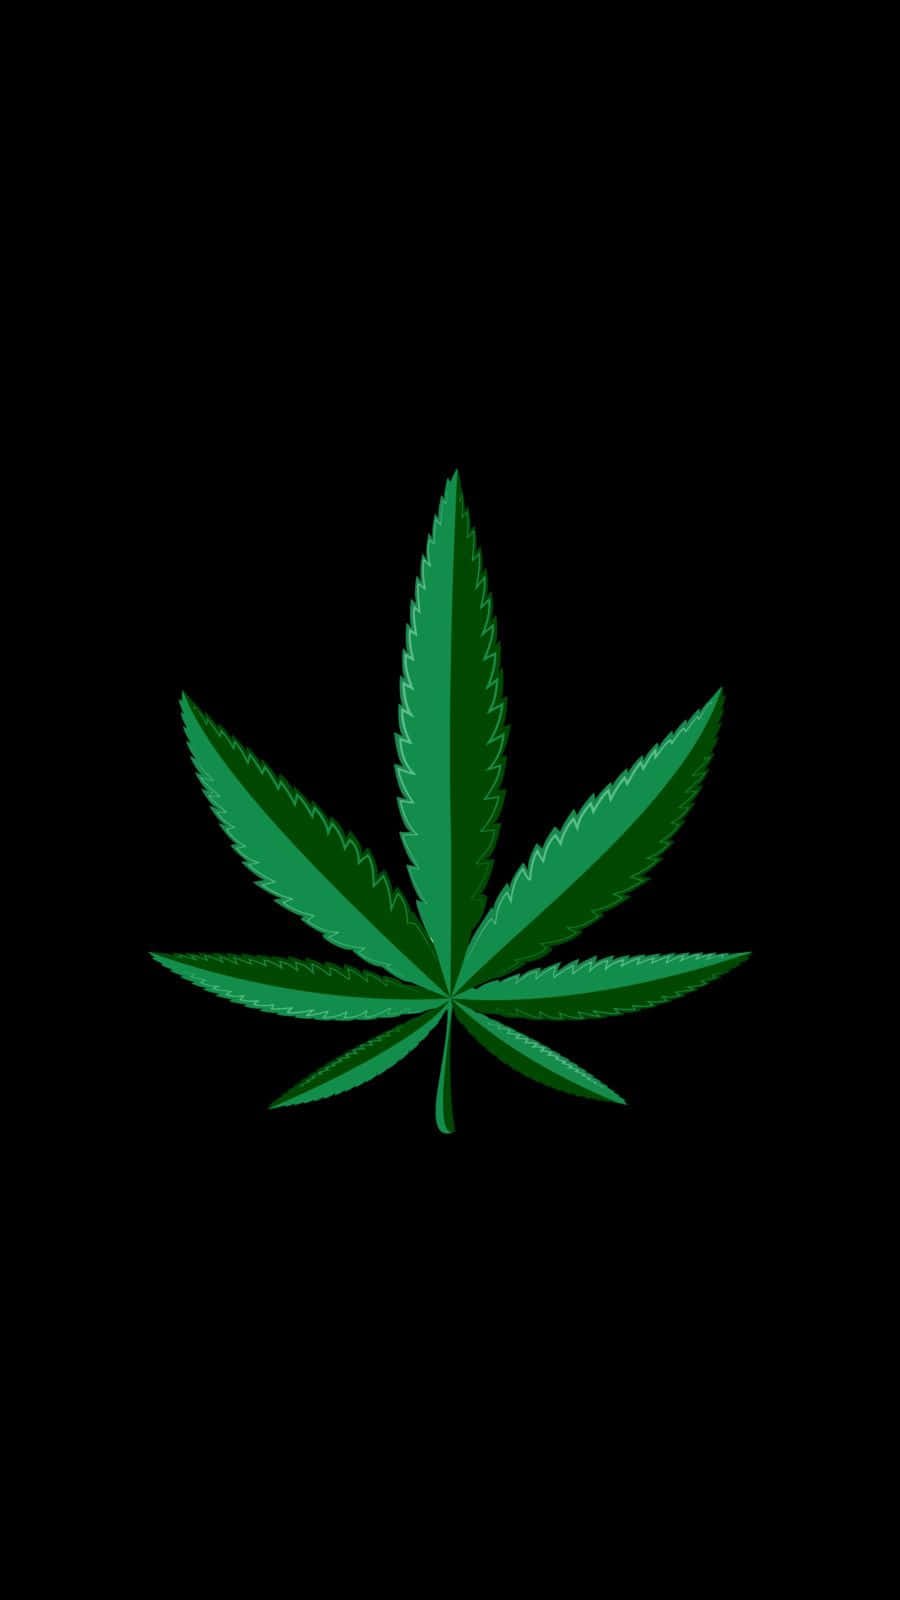 Free Cannabis Leaf Wallpaper Downloads, Cannabis Leaf Wallpaper for FREE